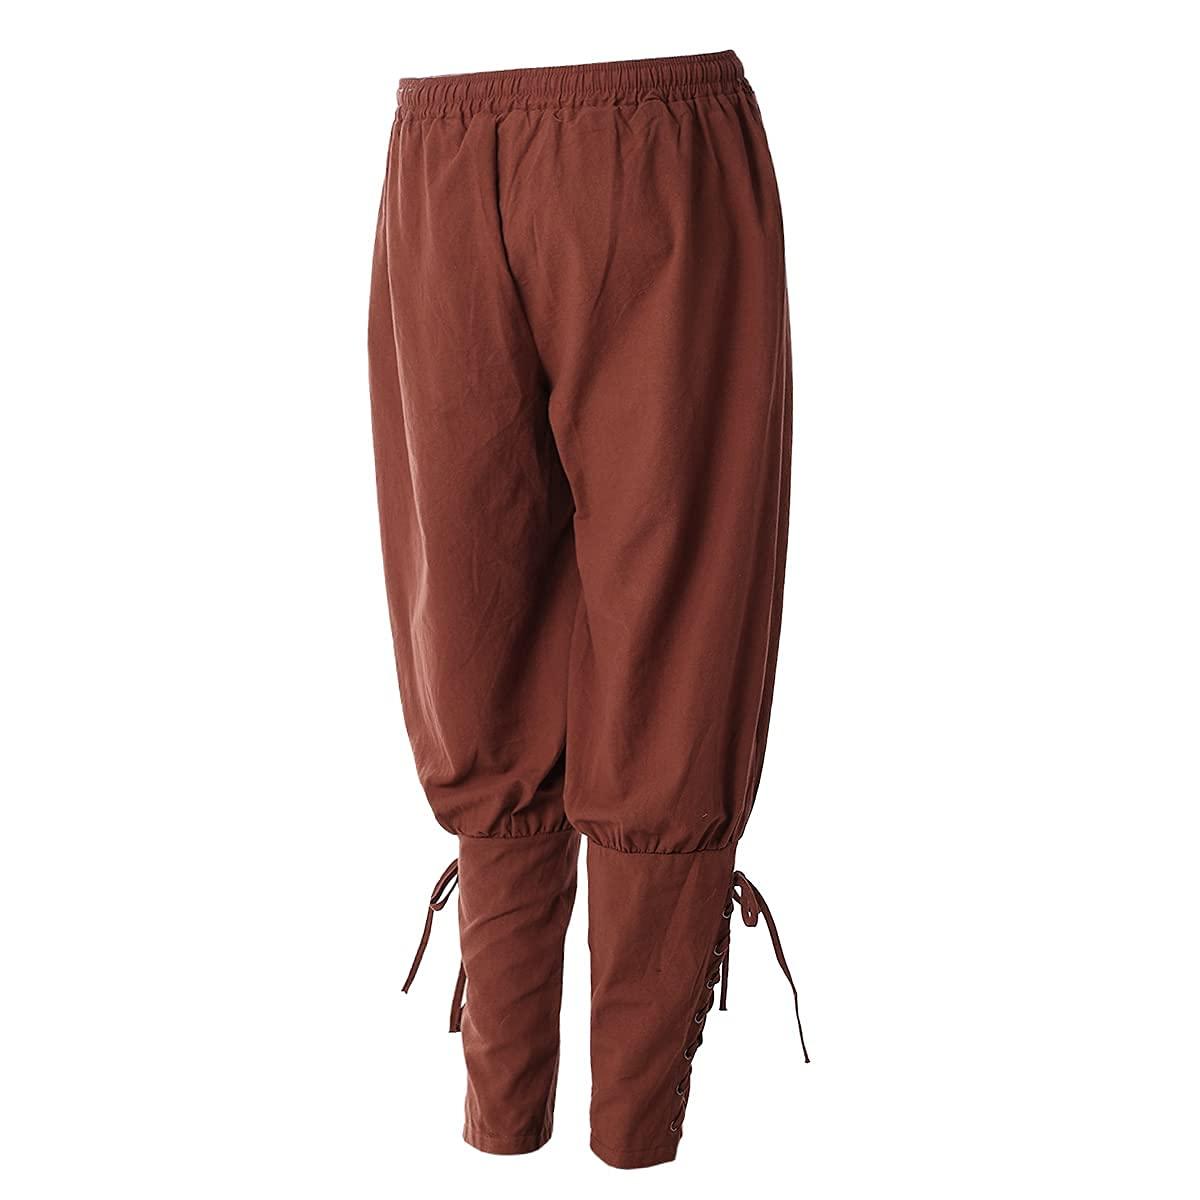 COSDREAMER Men's Medieval Pants Viking Pirate Costume Trousers Brown 2